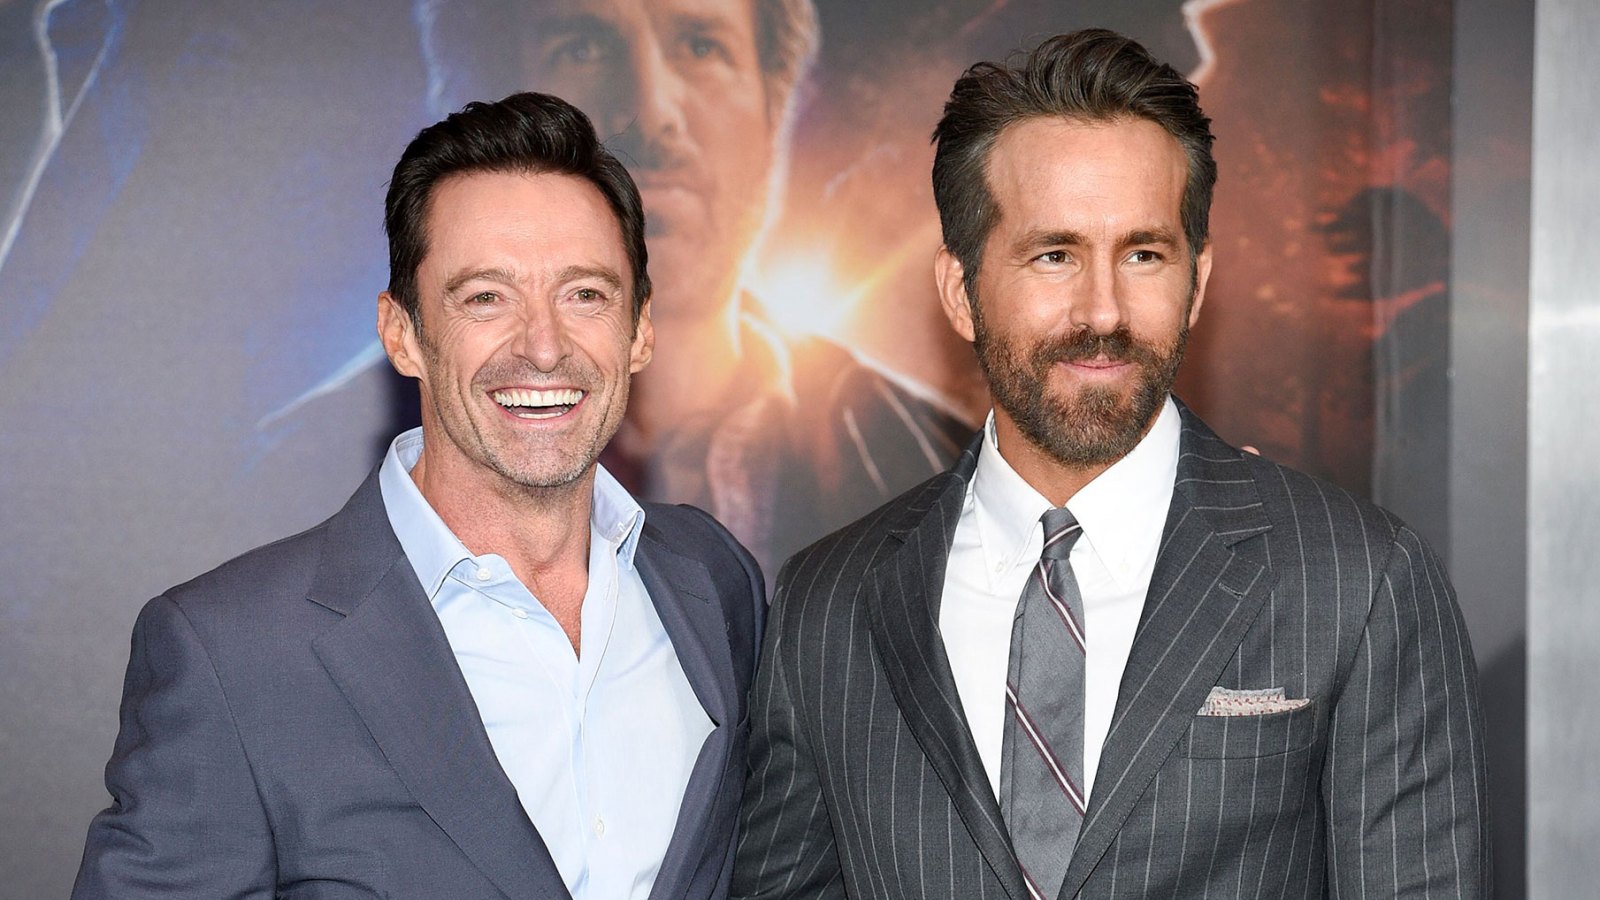 Ryan Reynolds Trying to Keep up With Hugh Jackman's 'Deadpool' Training